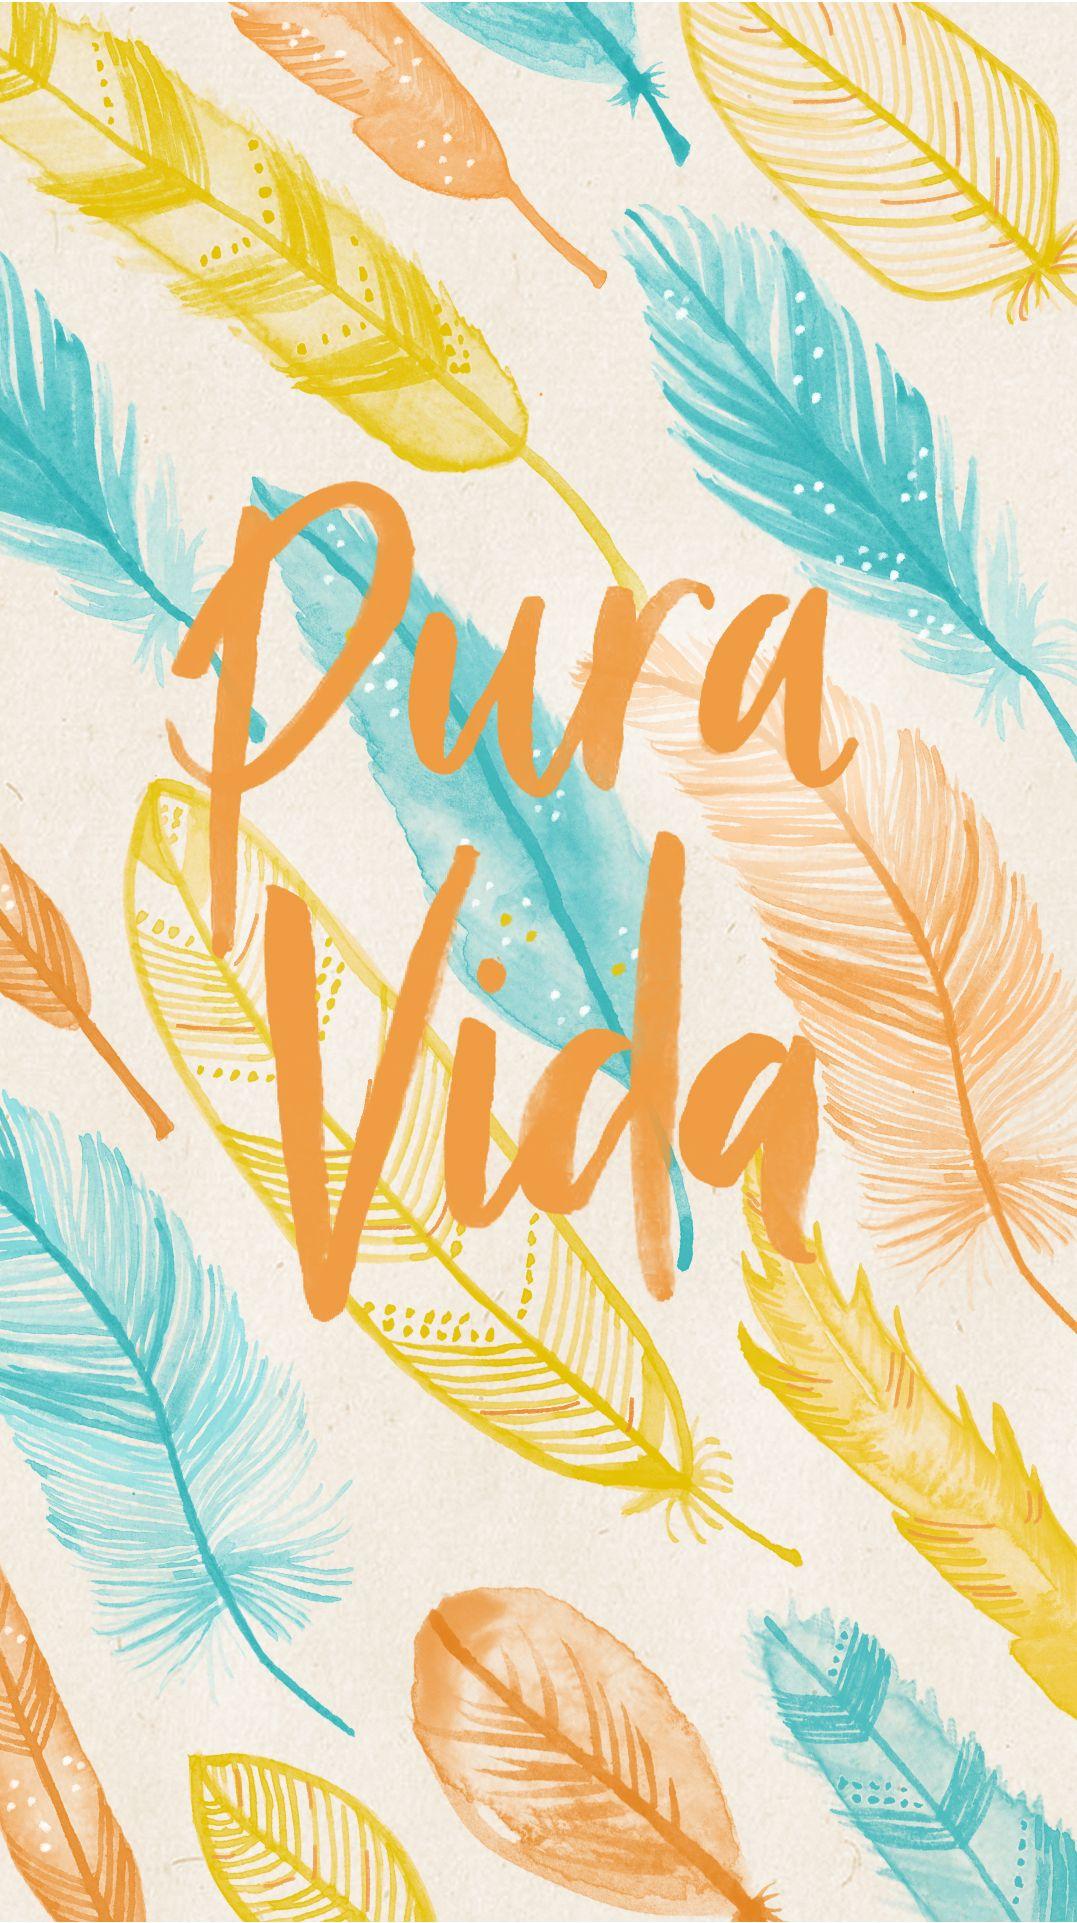 The Pura Vida Bracelets Blog in Love Digi Downloads. iPhone wallpaper fall, Halloween wallpaper iphone, Wallpaper background